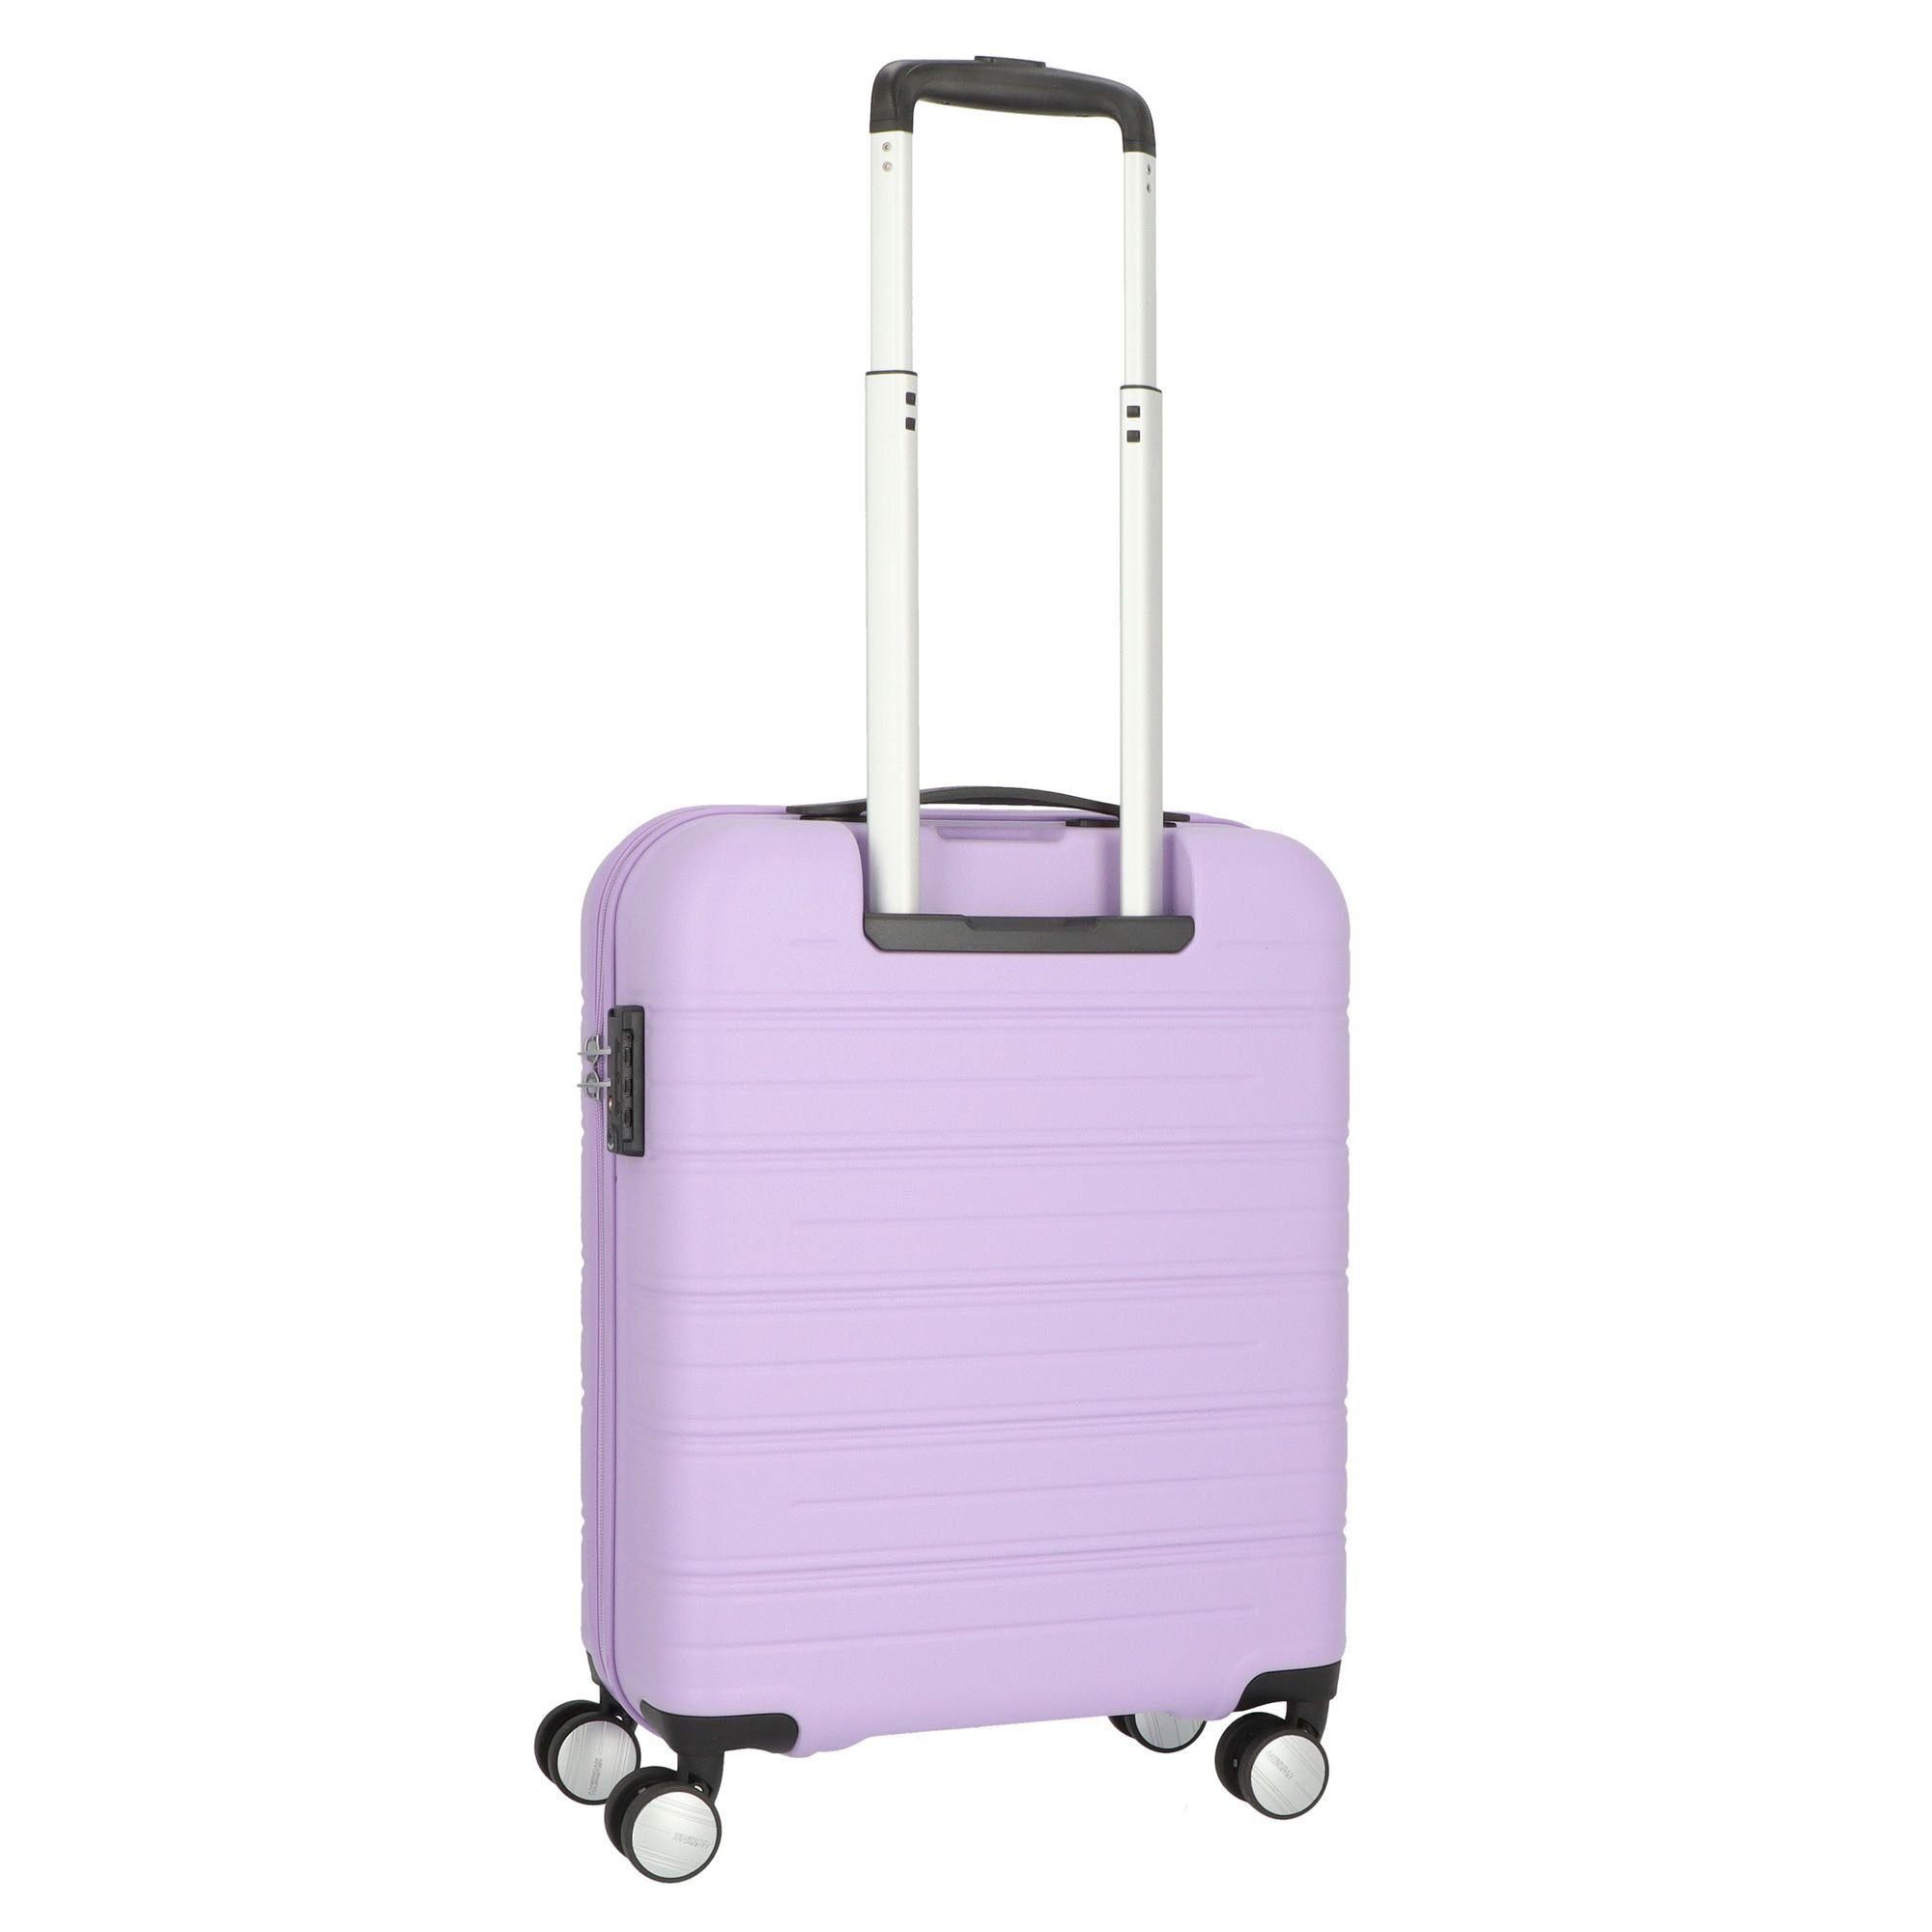 Tourister® matt lavender Handgepäck-Trolley Rollen, Turn, High ABS 4 American